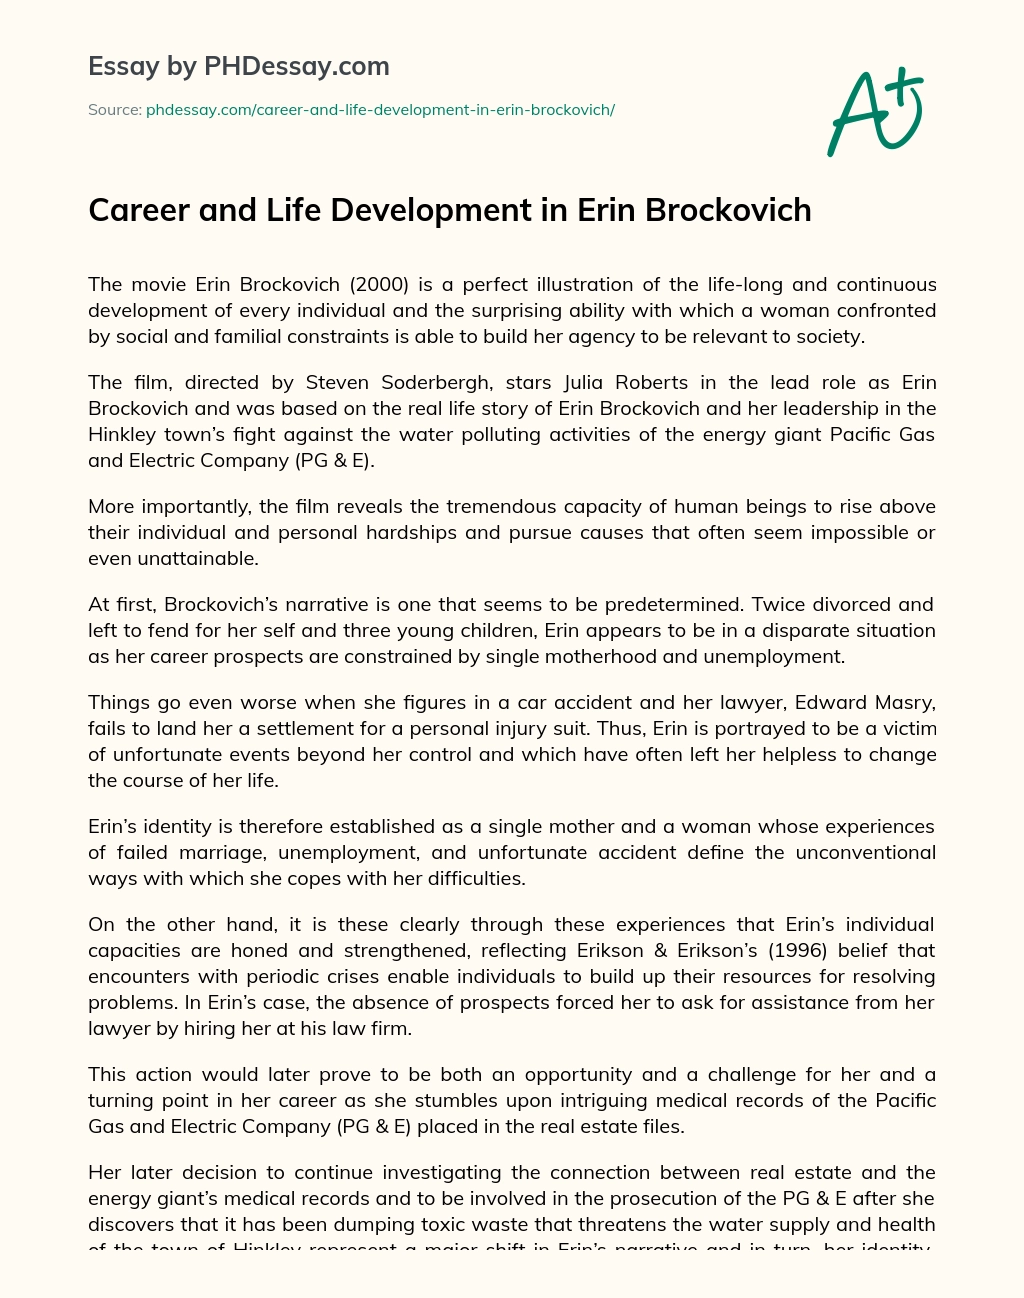 Career and Life Development in Erin Brockovich essay